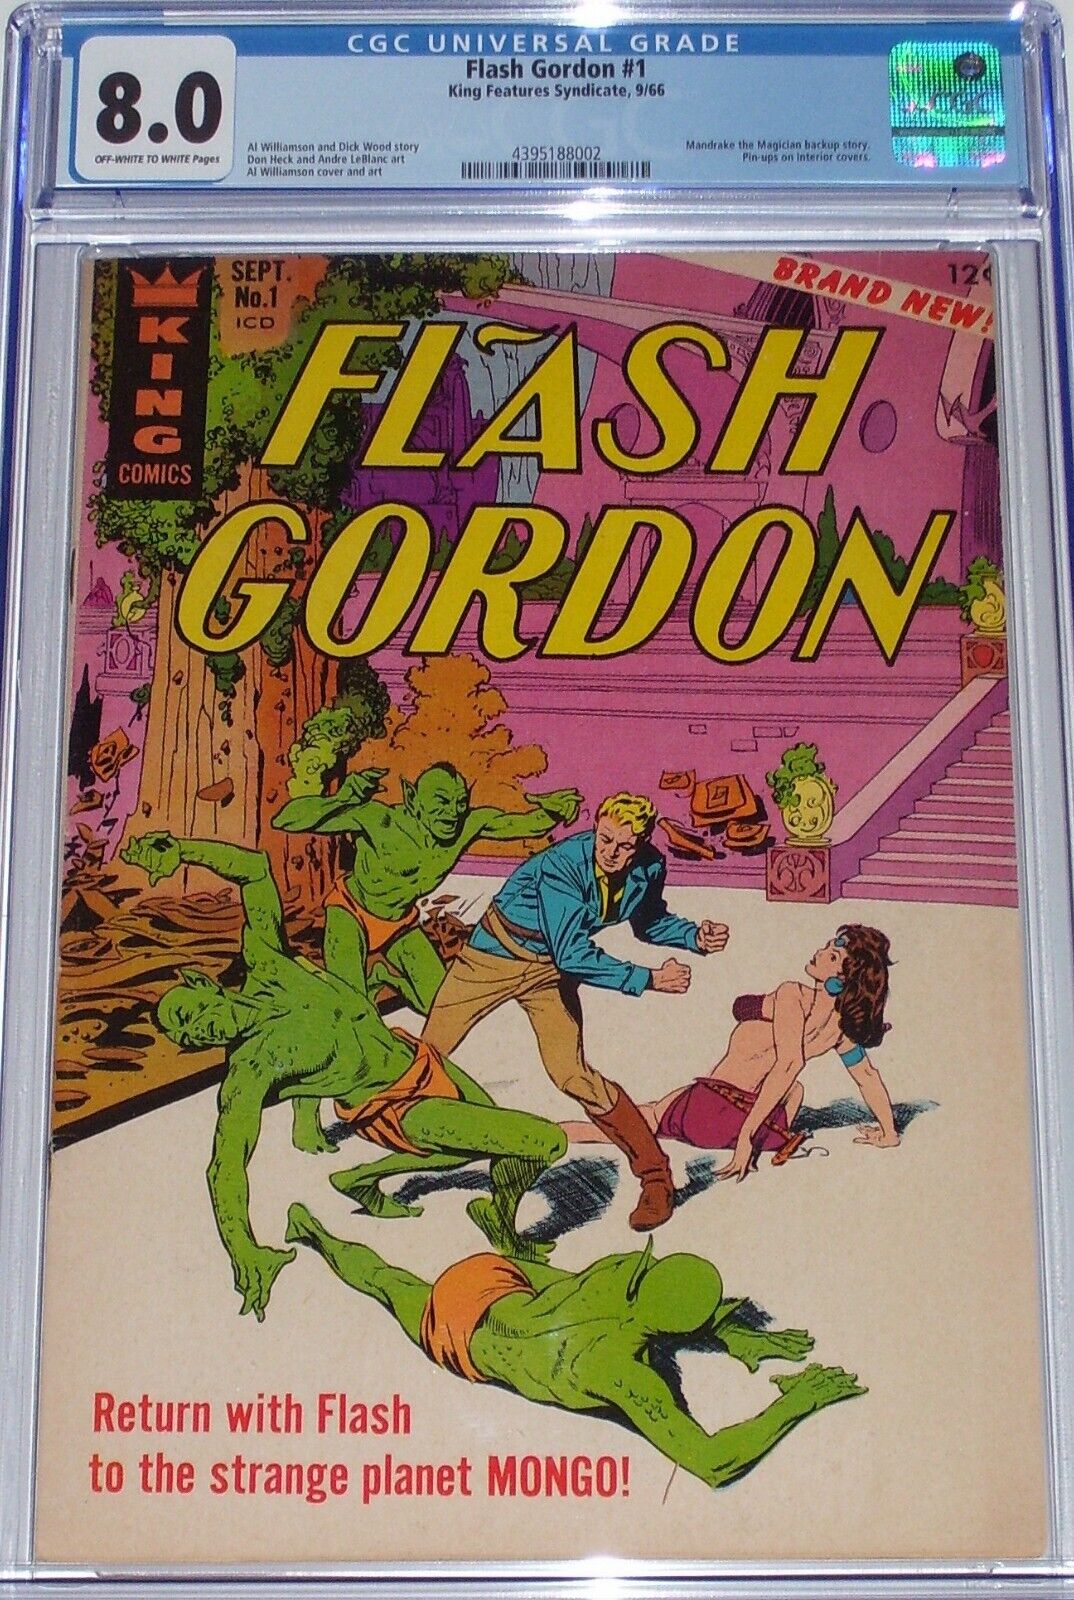 Flash Gordon #1 CGC 8.0 from Sept 1966